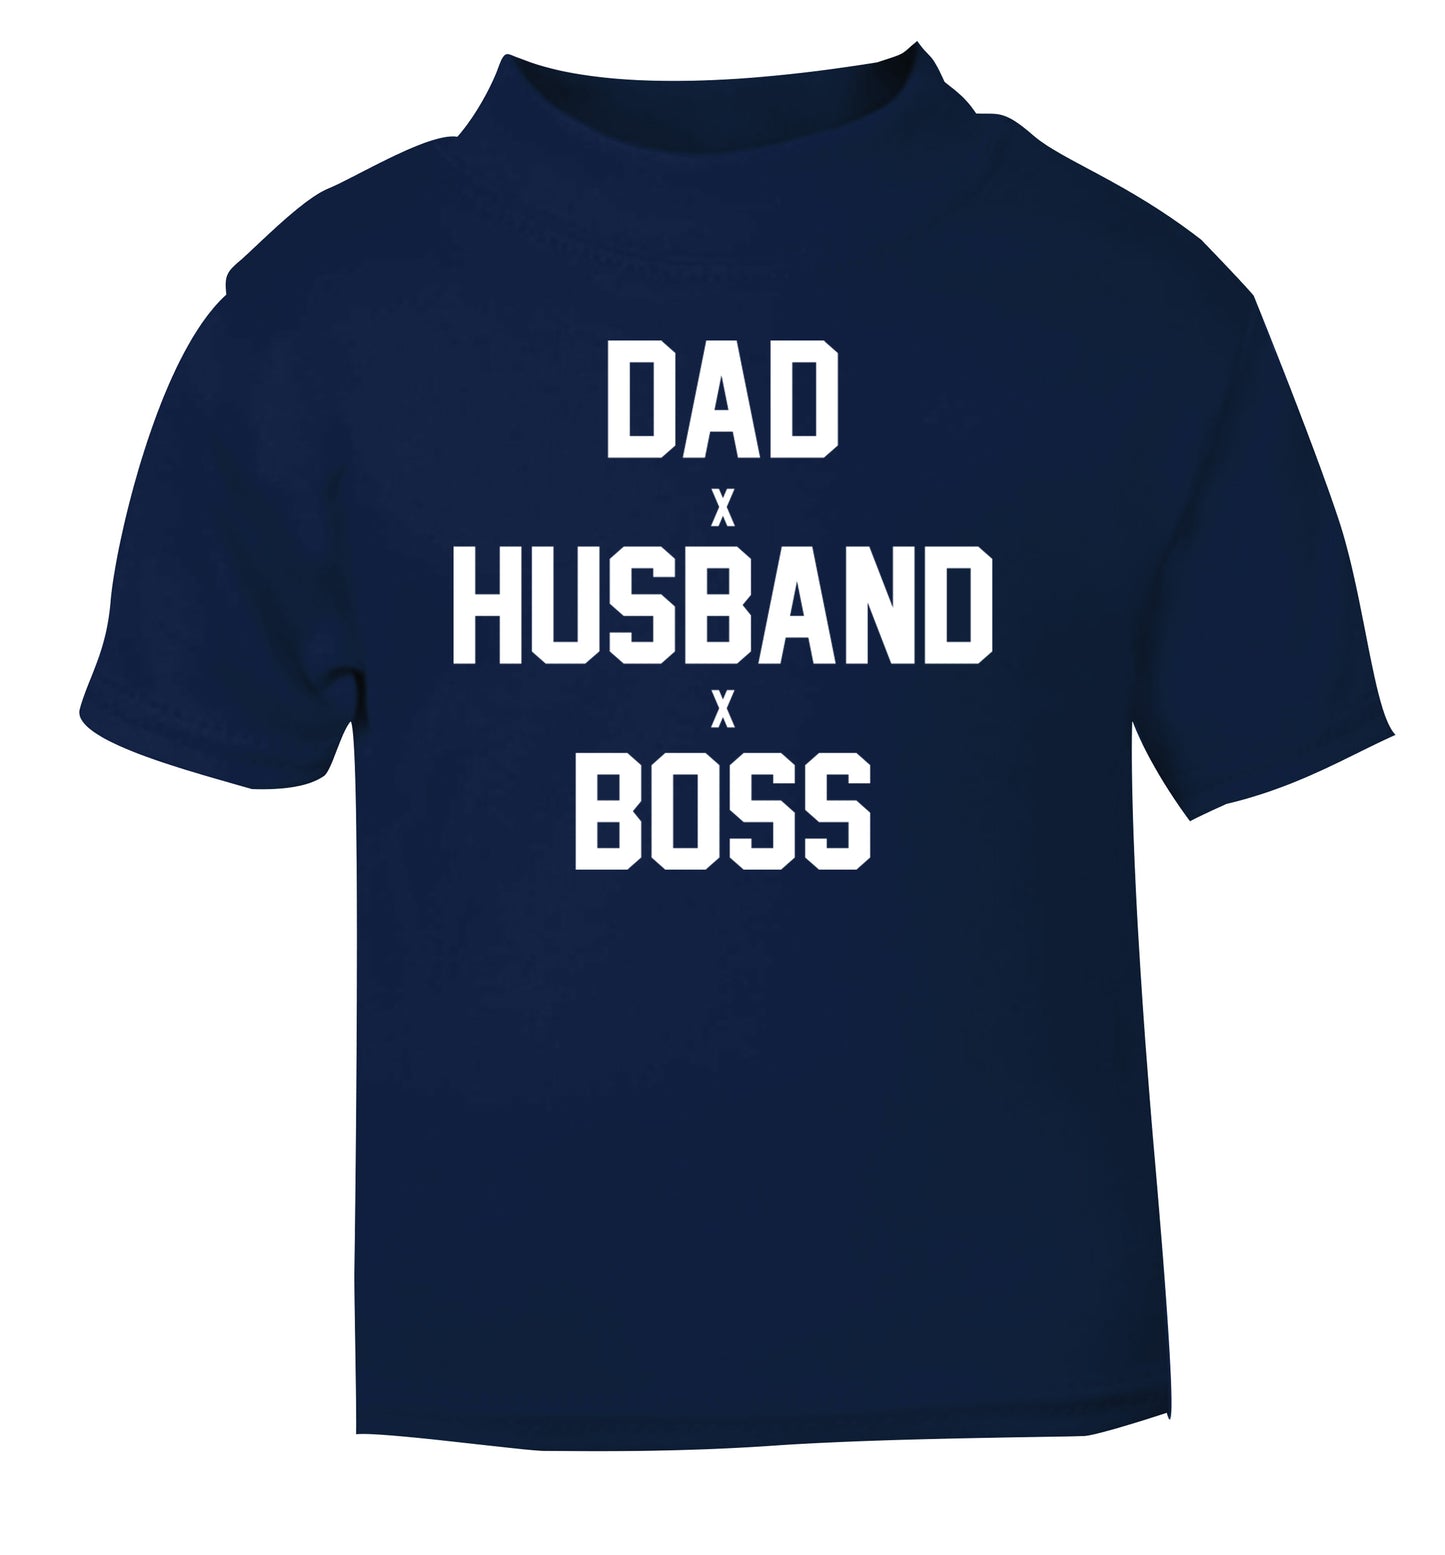 Dad husband boss navy Baby Toddler Tshirt 2 Years